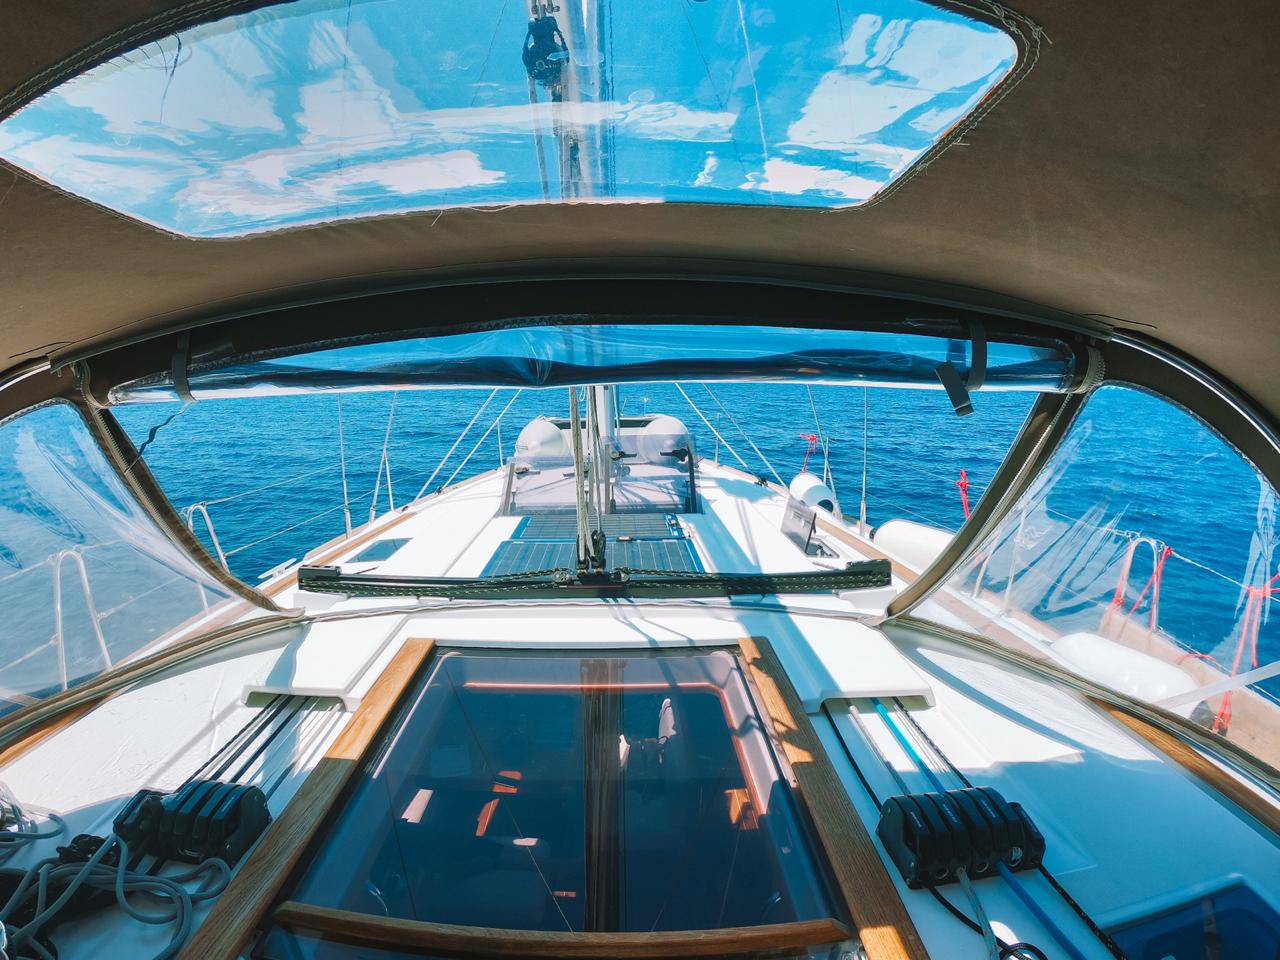 catamaran or monohull for cruising